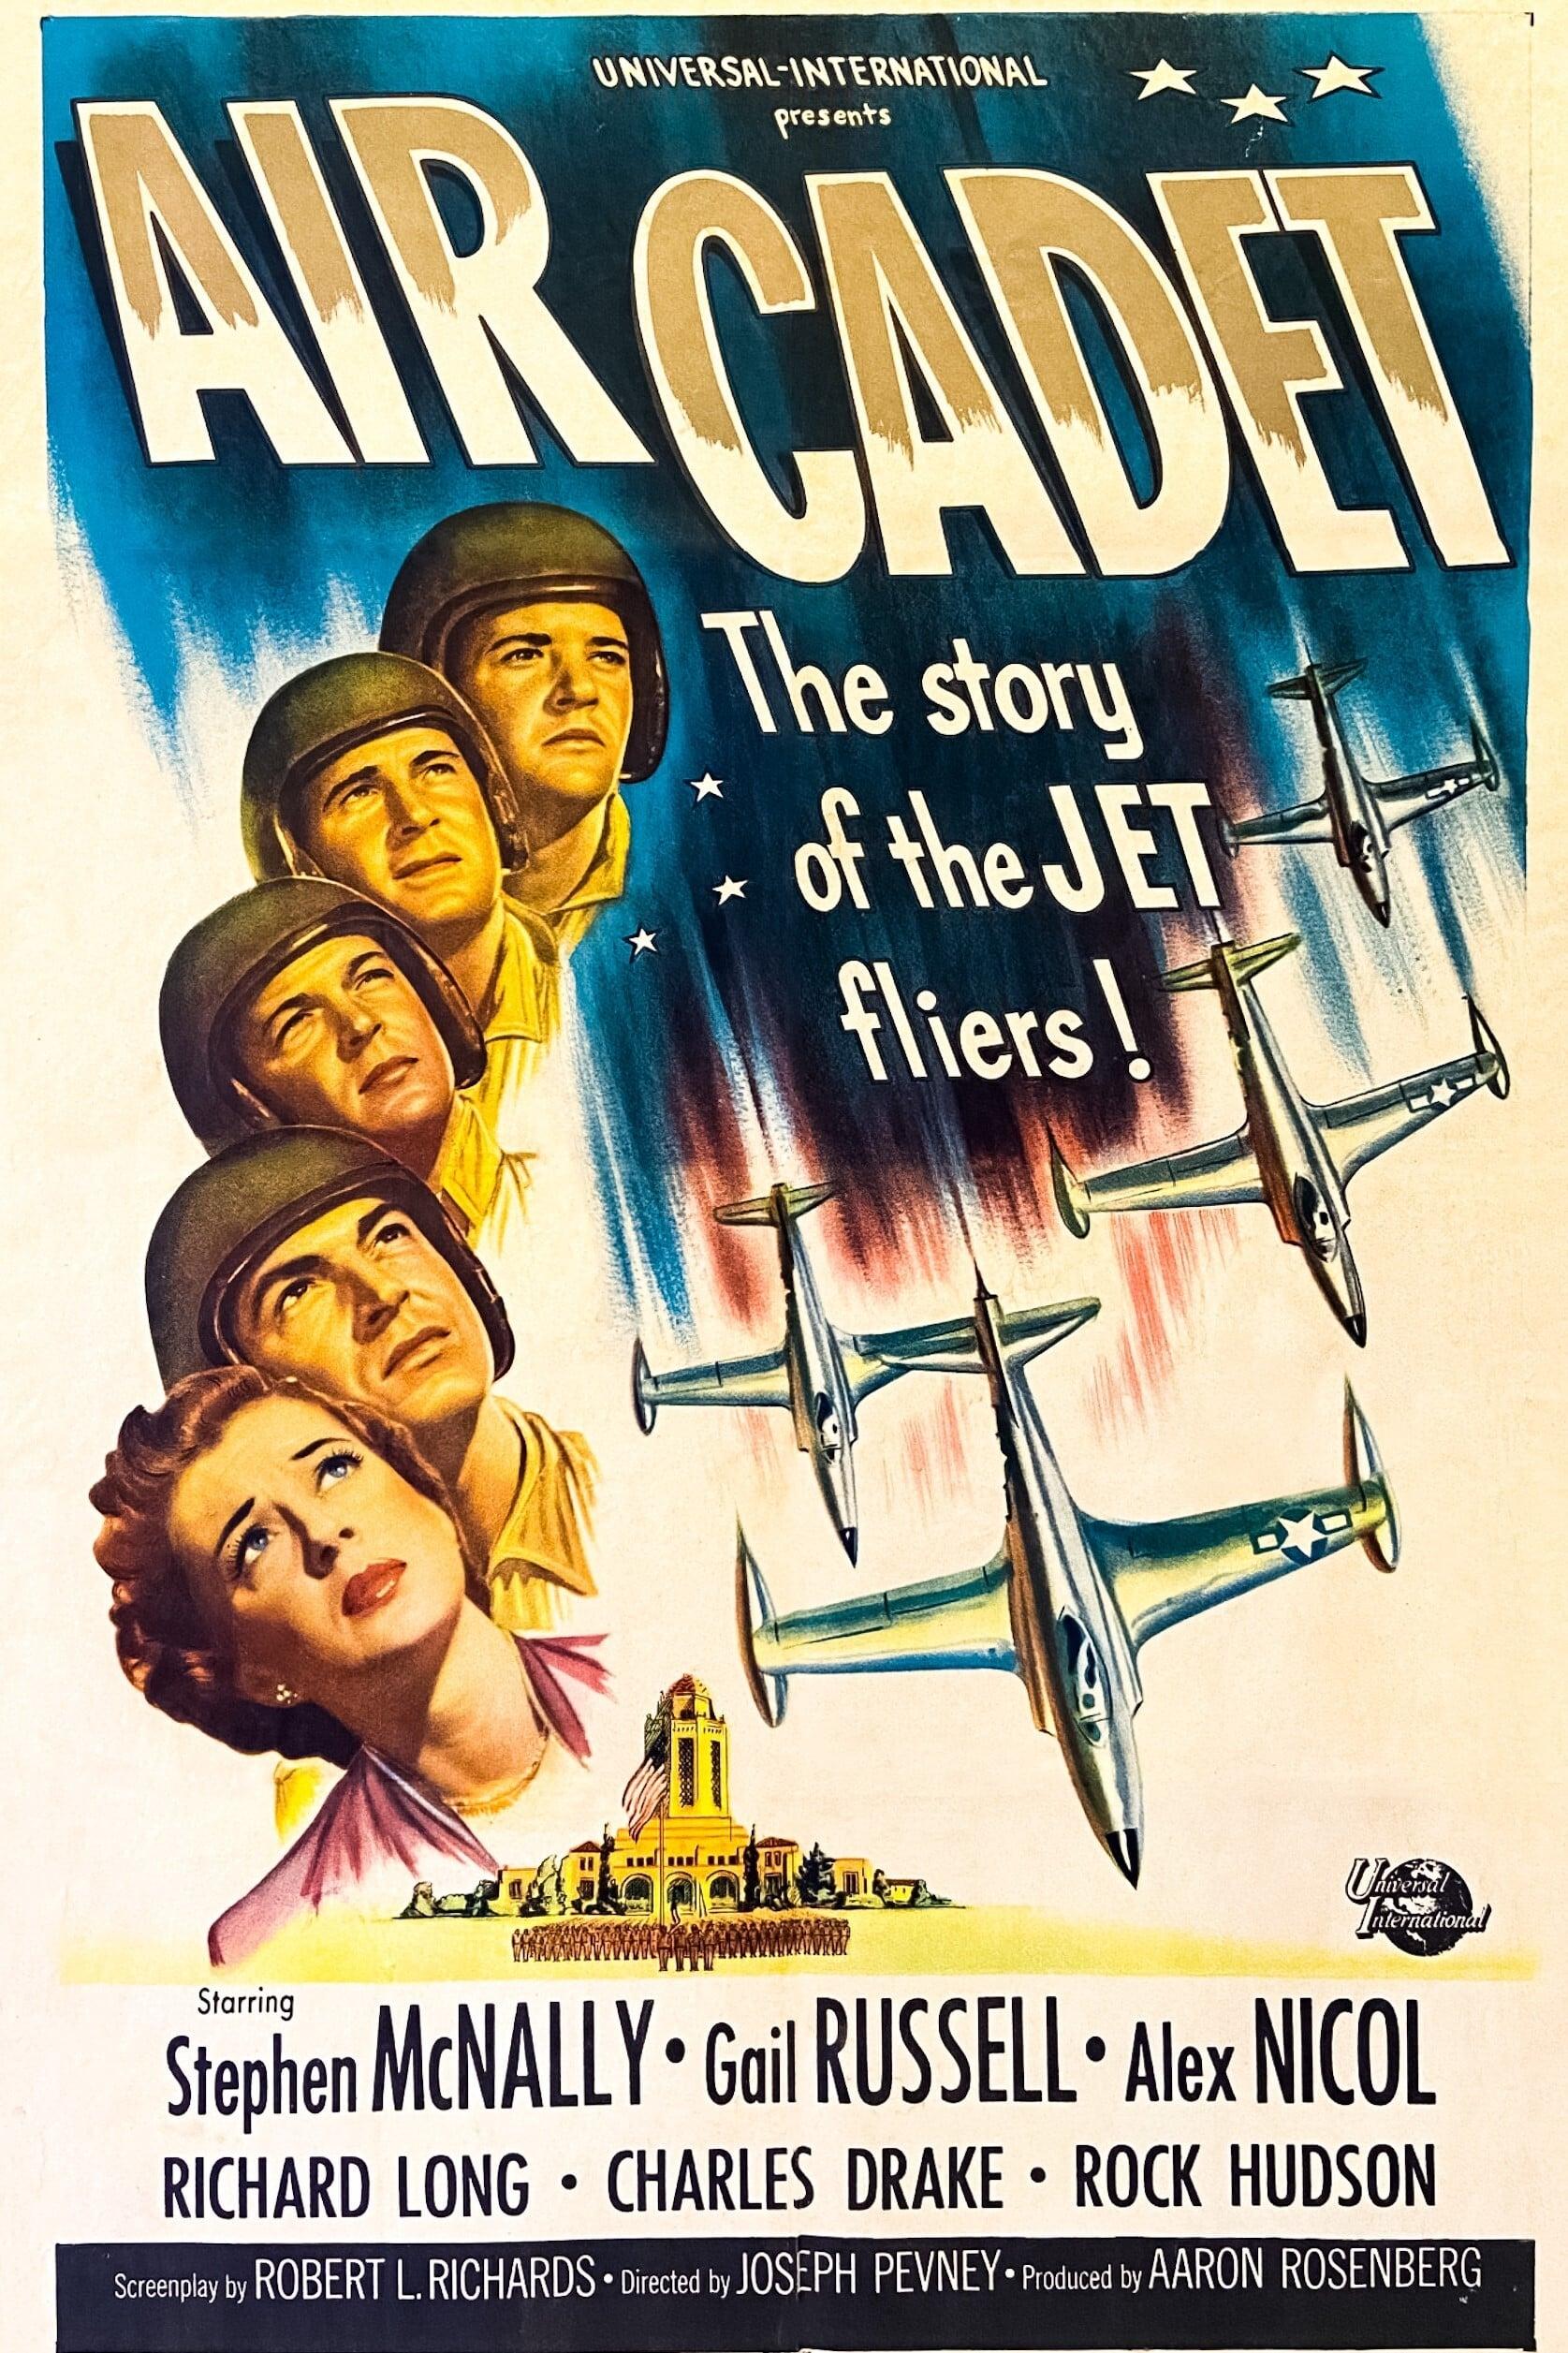 Air Cadet poster